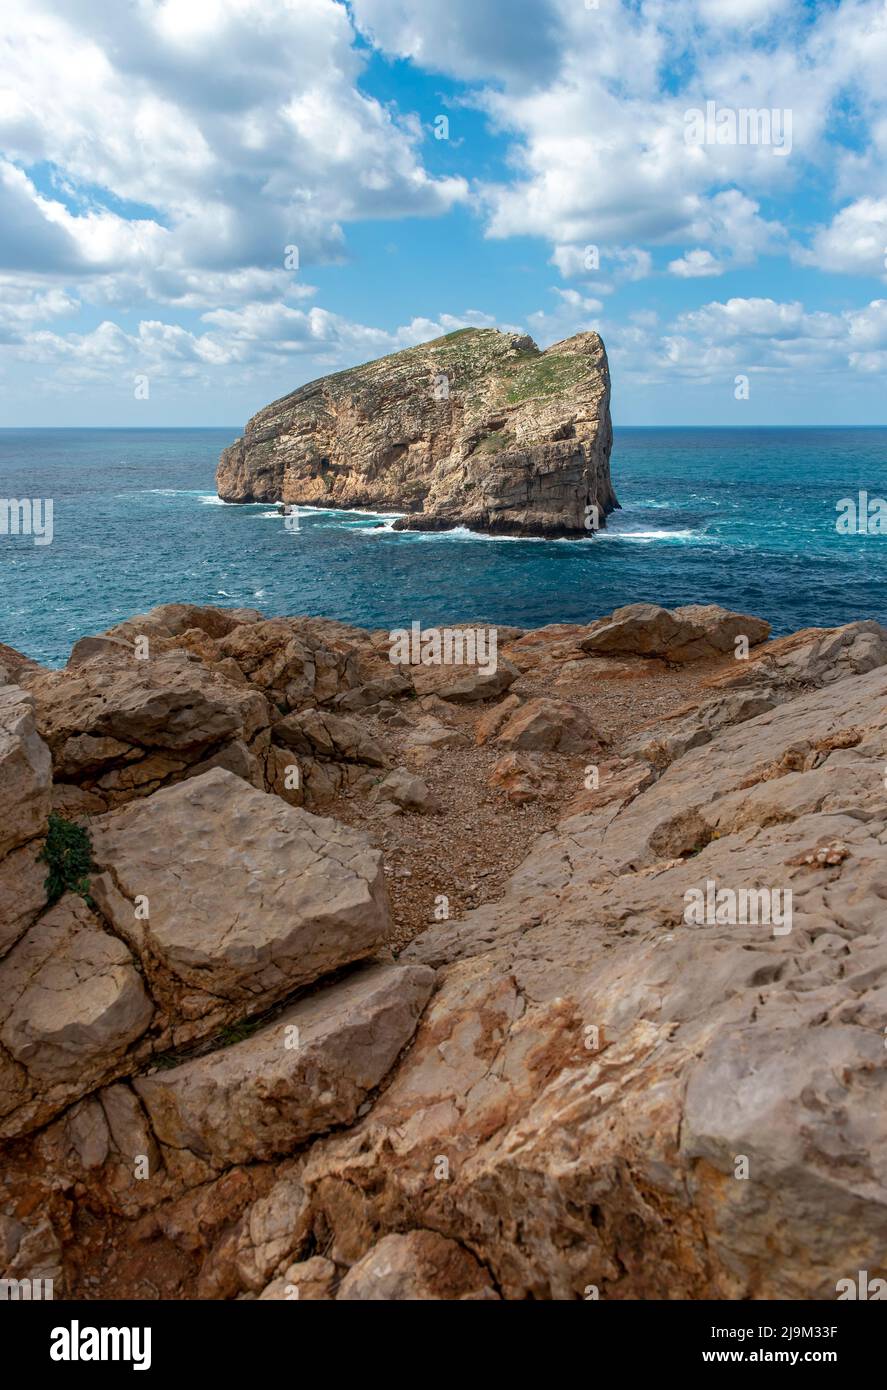 View of Foradada Island from Belvedere La Foradada, Capo Caccia, Alghero, Sardinia, Italy Stock Photo